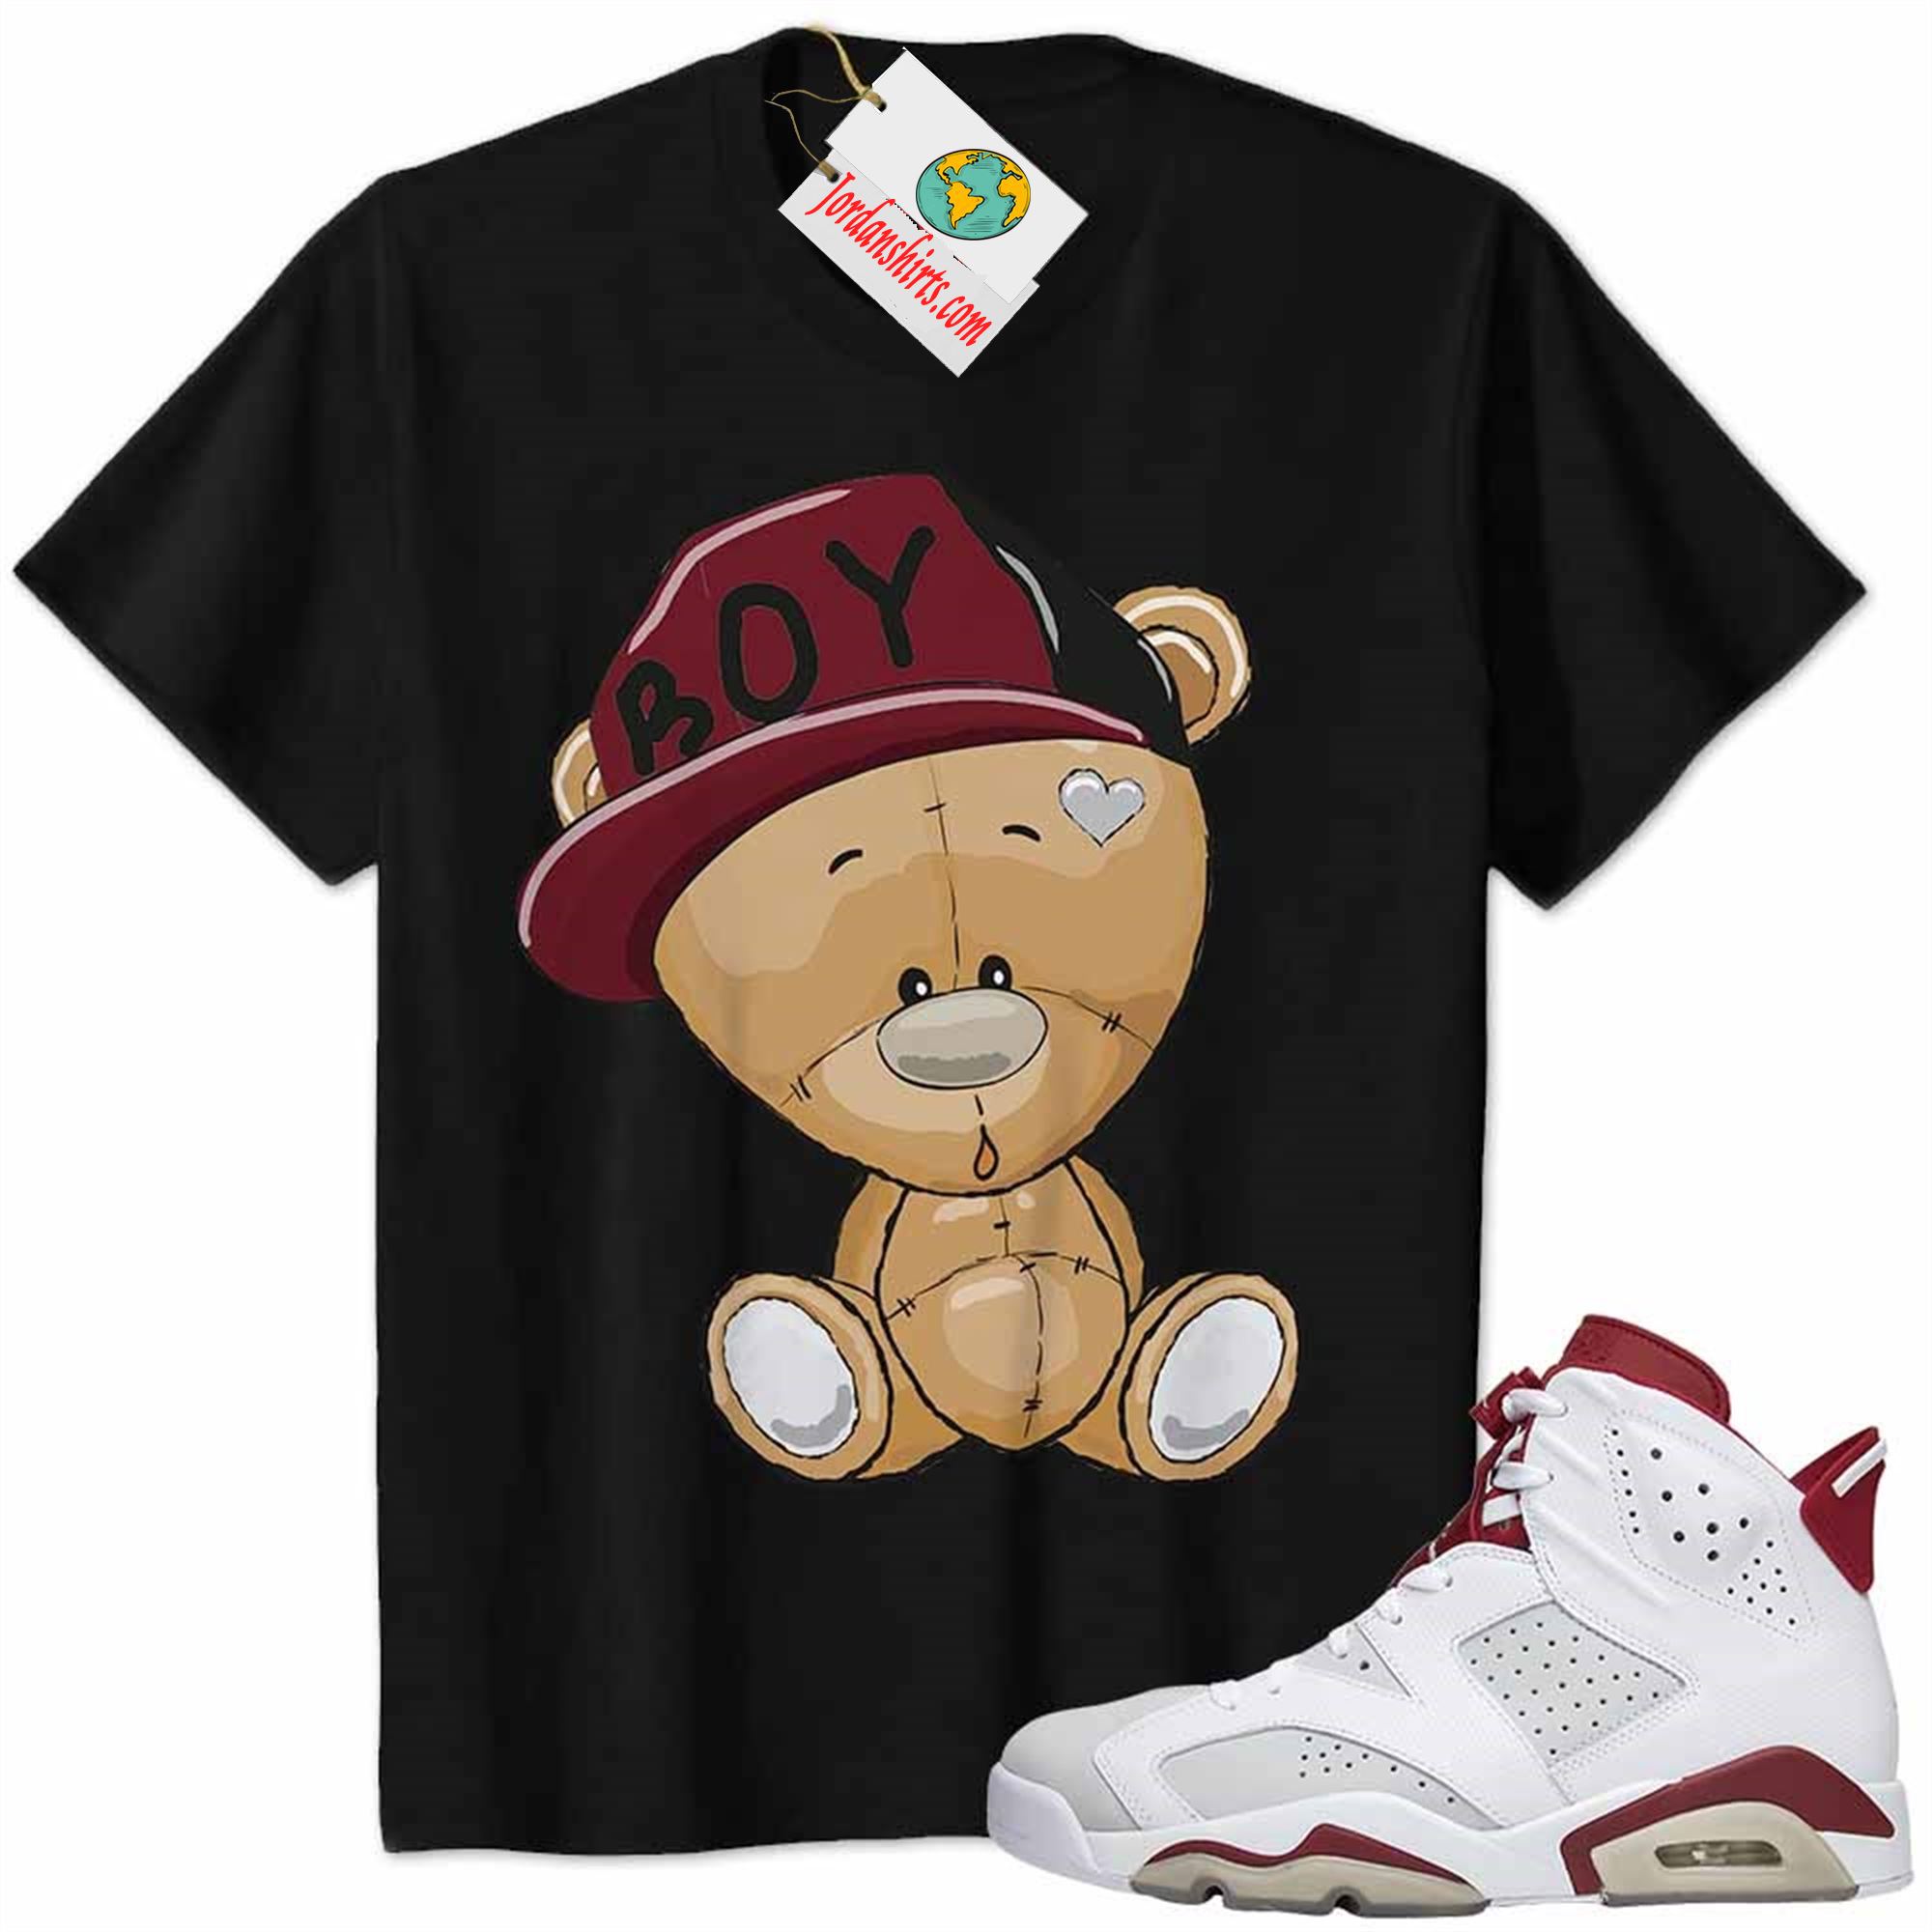 Jordan 6 Shirt, Jordan 6 Alternate Shirt Cute Baby Teddy Bear Black Full Size Up To 5xl